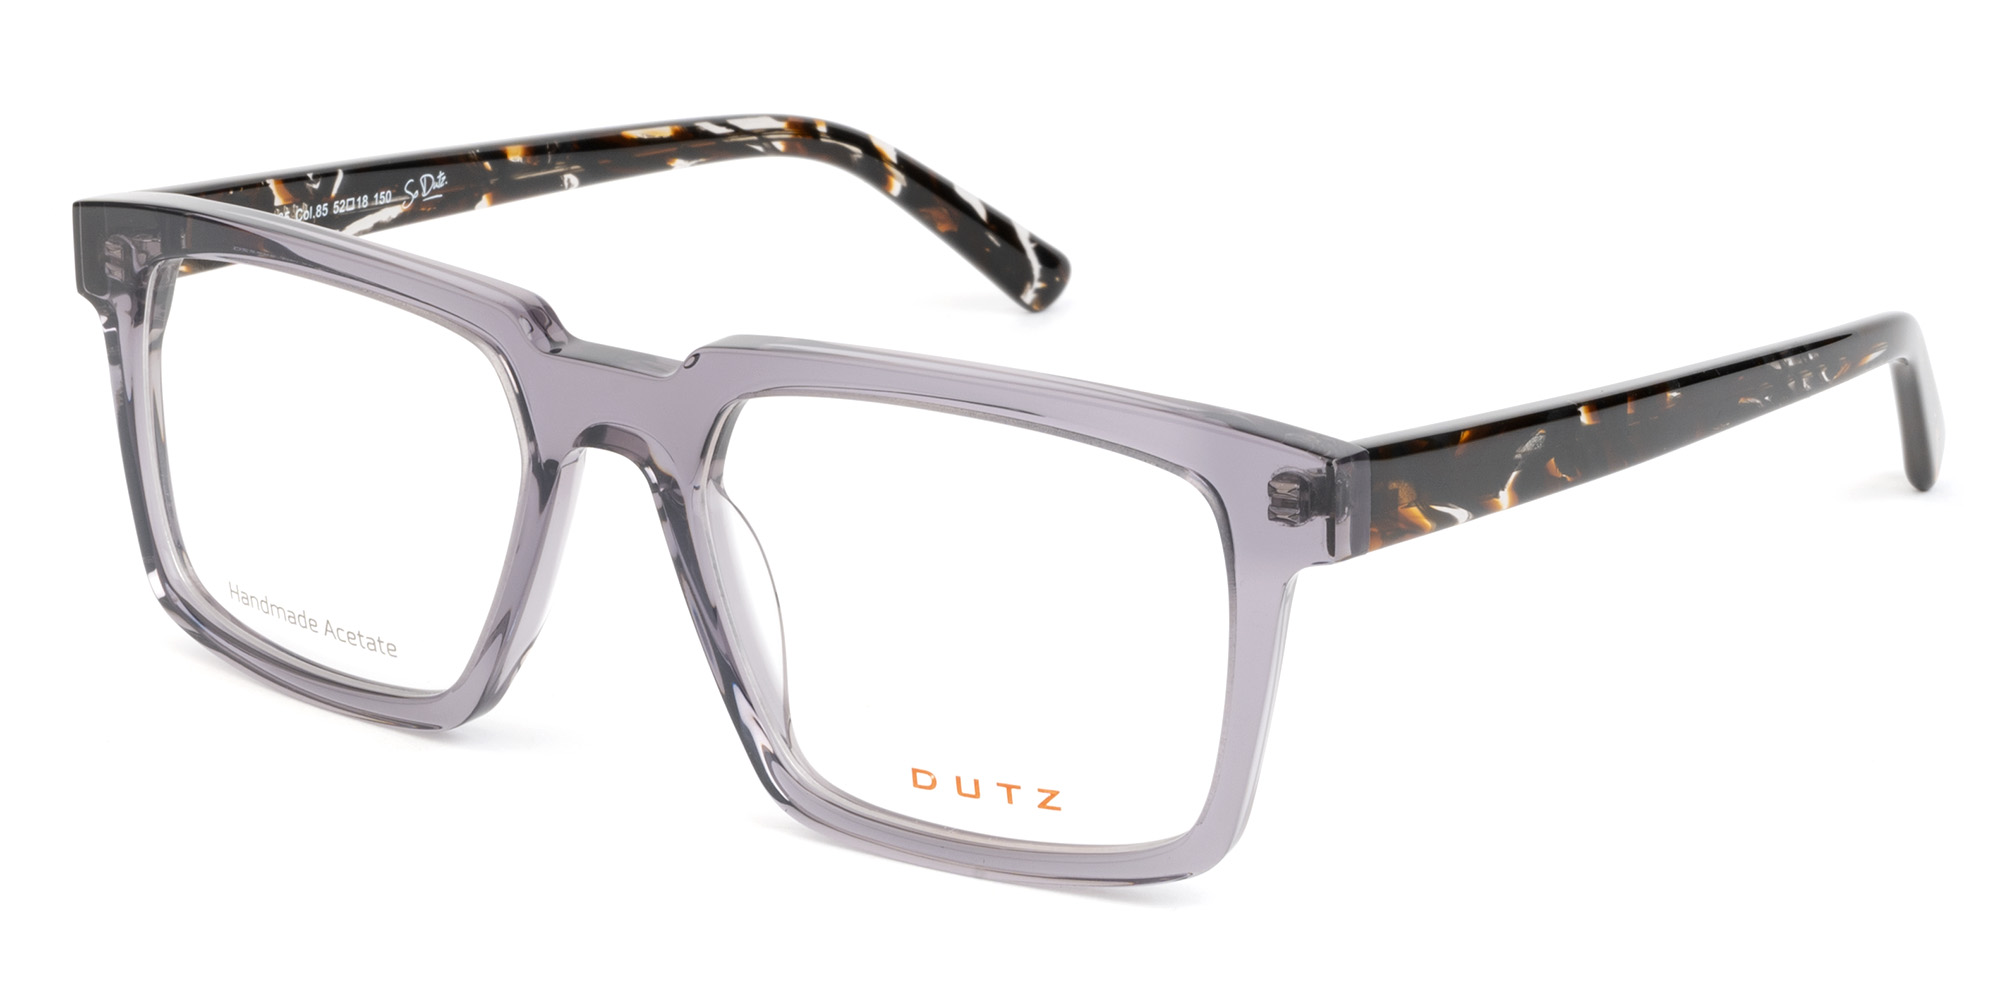 DZ2265 (52-18/150) - Dutz Eyewear